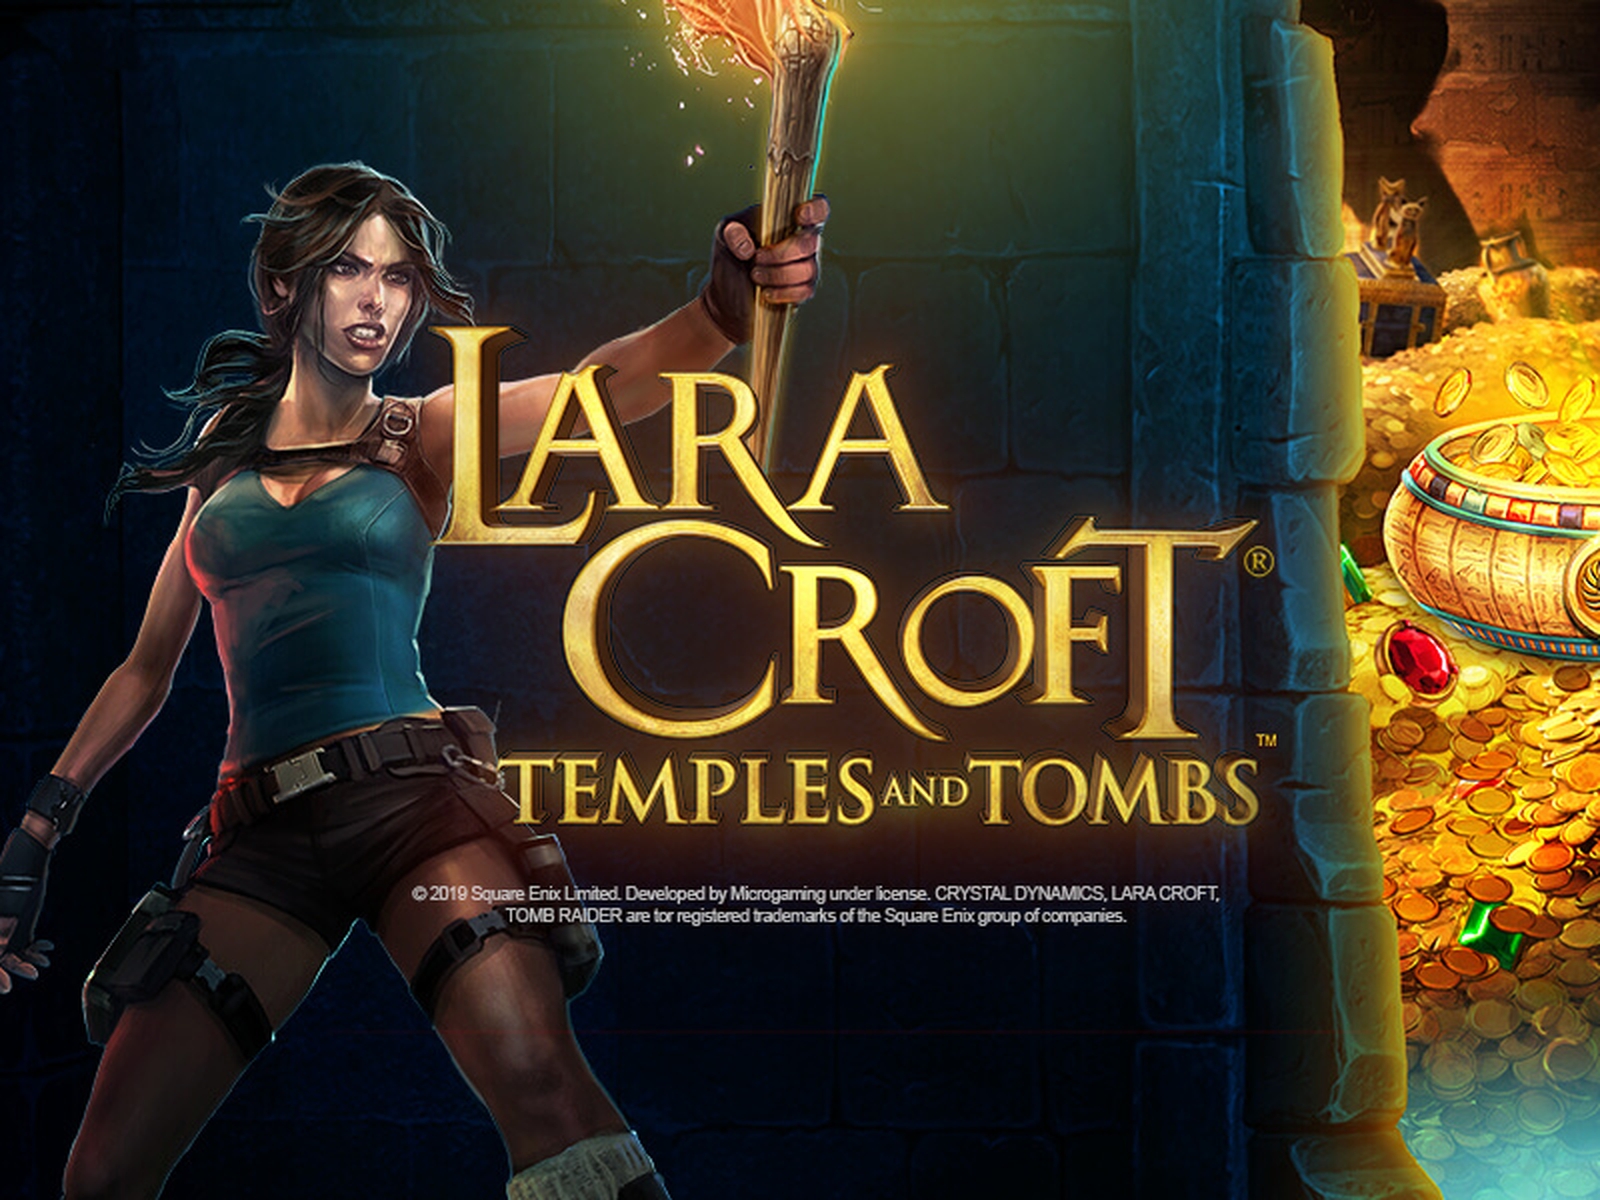 Lara Croft Temples and Tombs demo